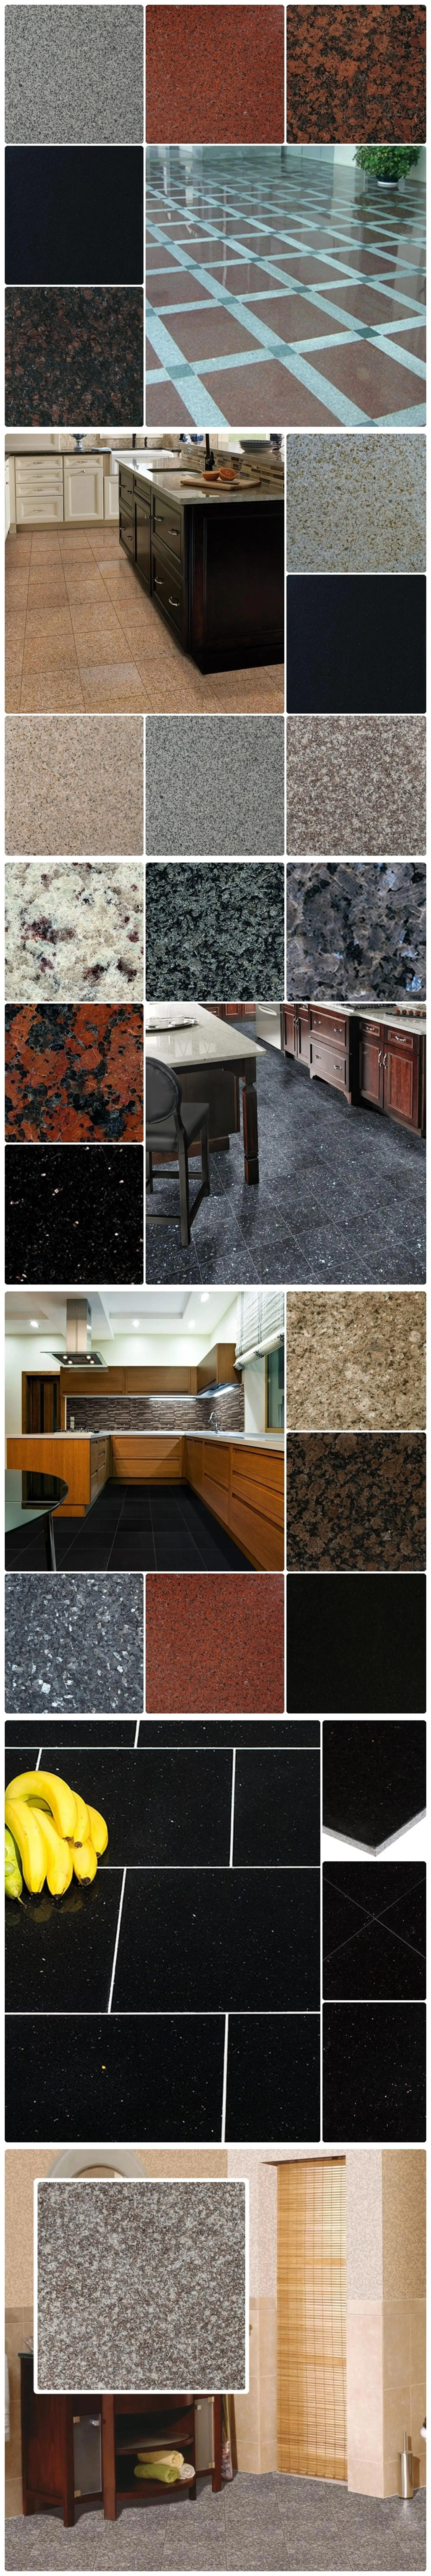 New Chinese granite g664 granite stone tile